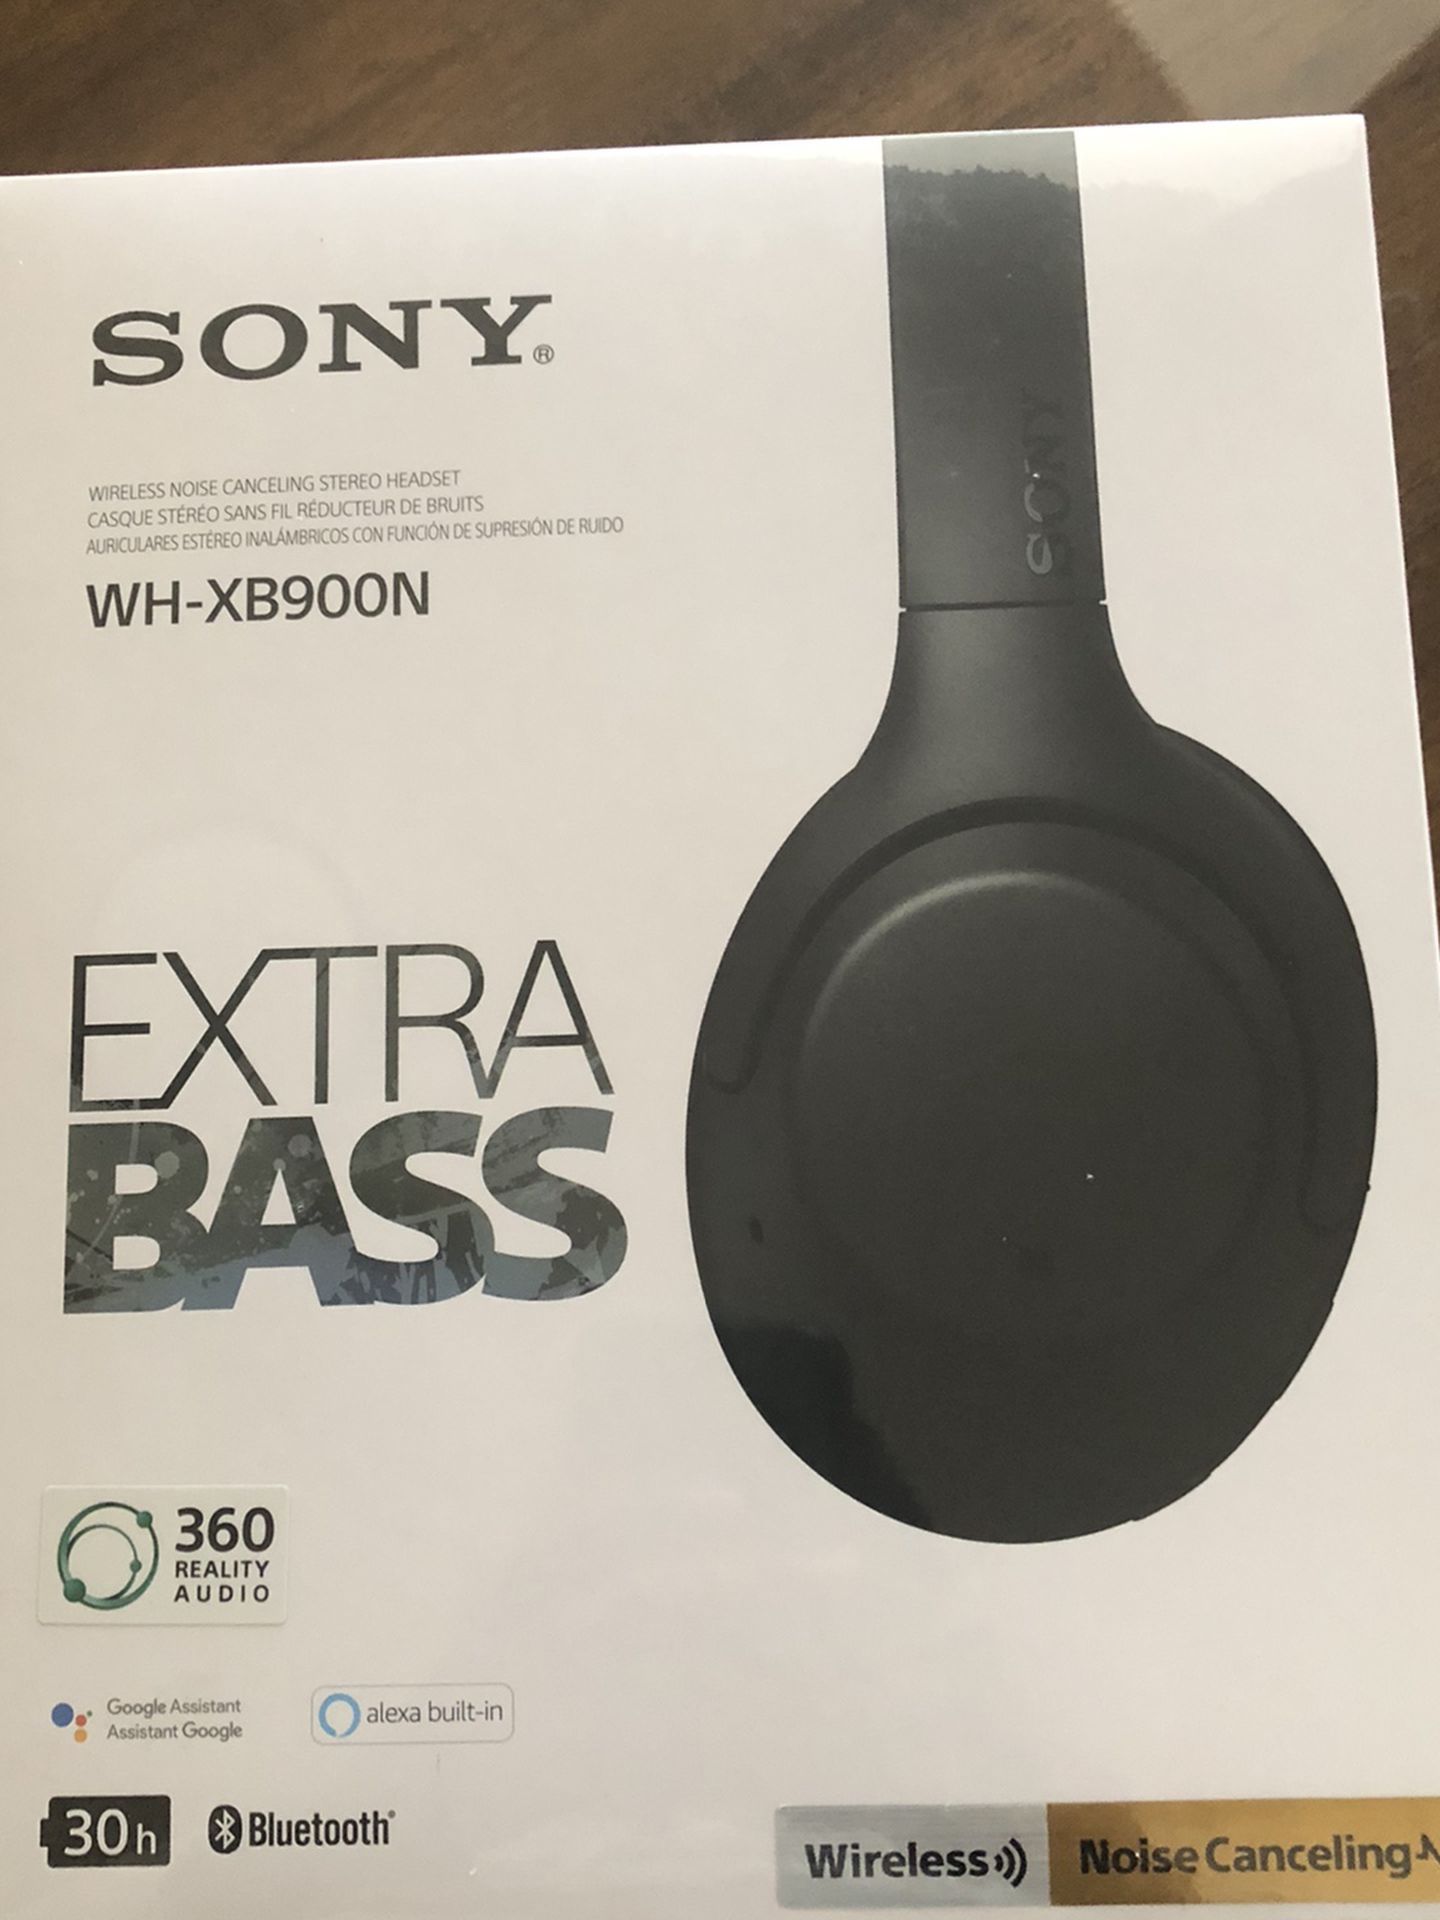 Unopened Box - Sony Xtra Bass headphones